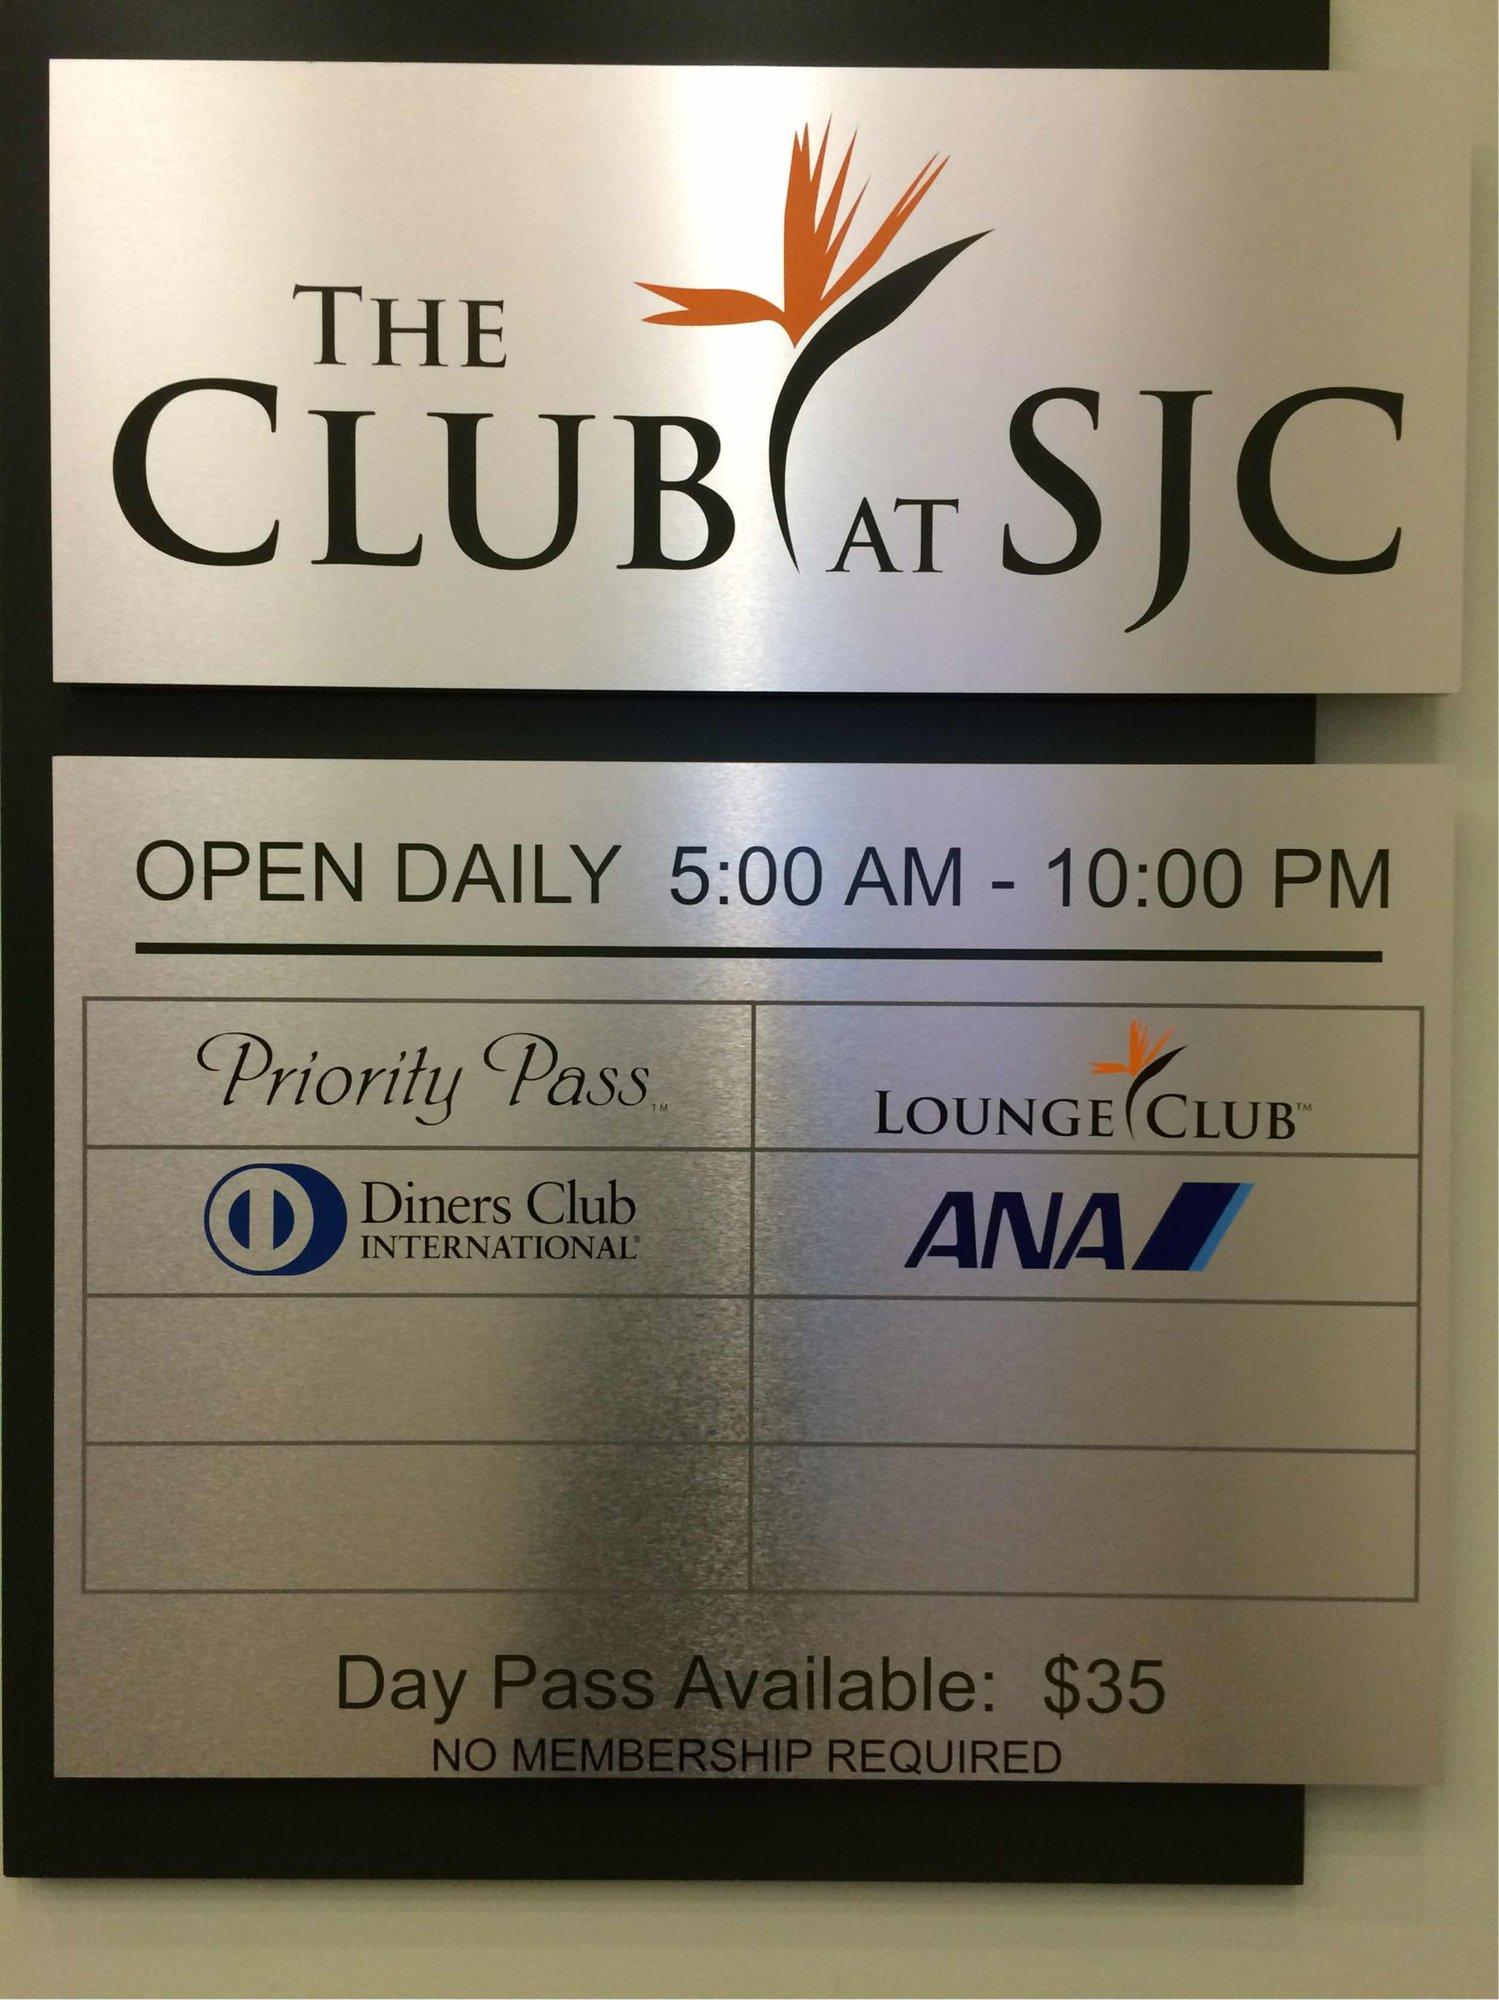 The Club SJC (Gate A15) image 31 of 33